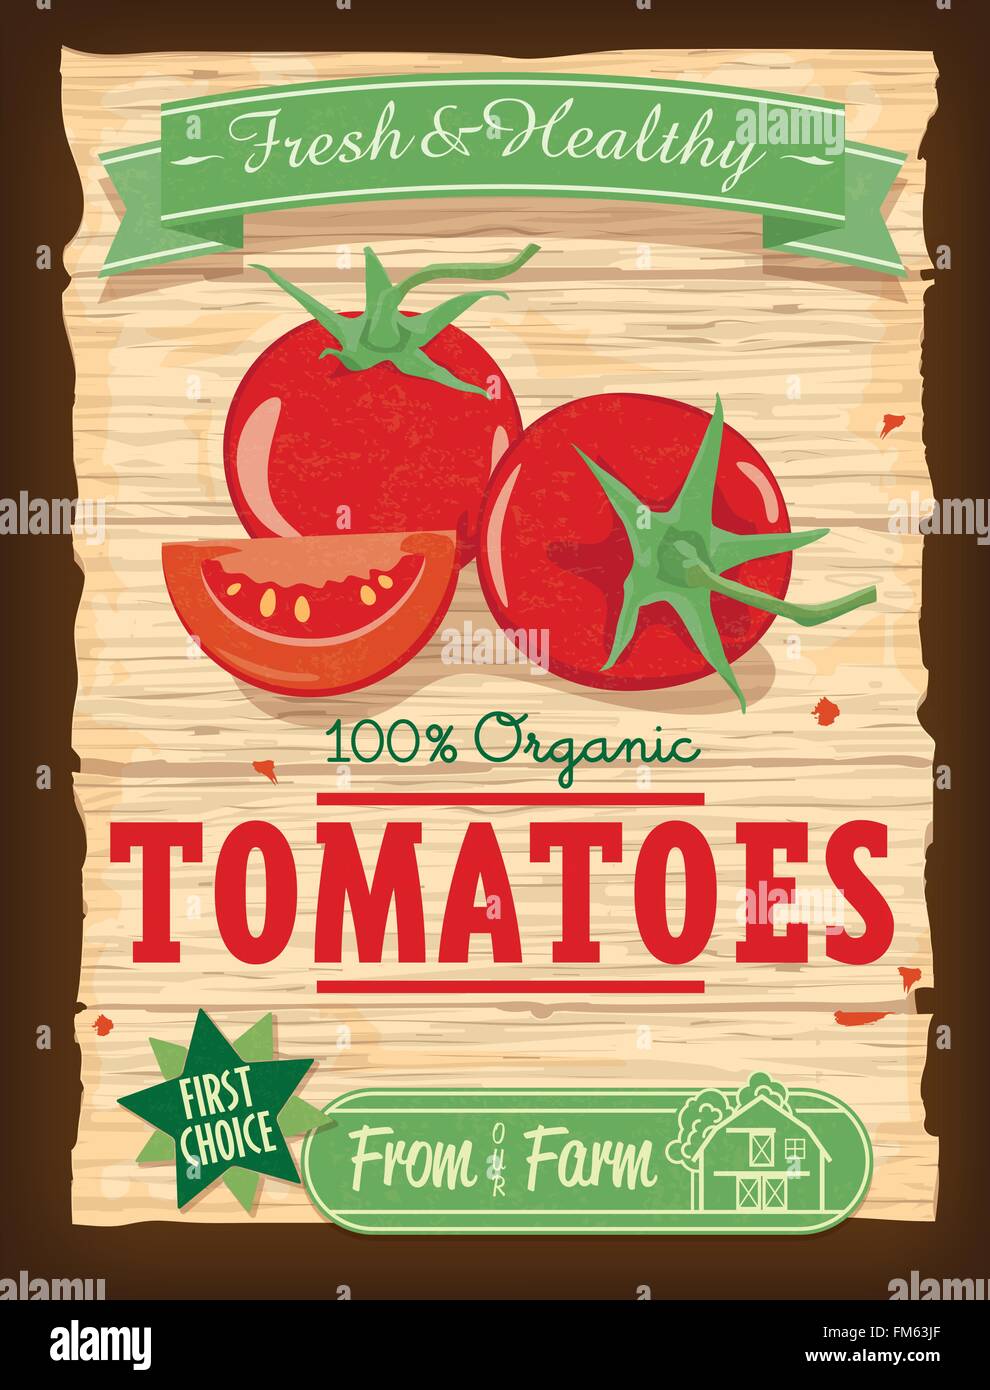 Vintage-Stil-Tomate-Werbeplakat Stock Vektor